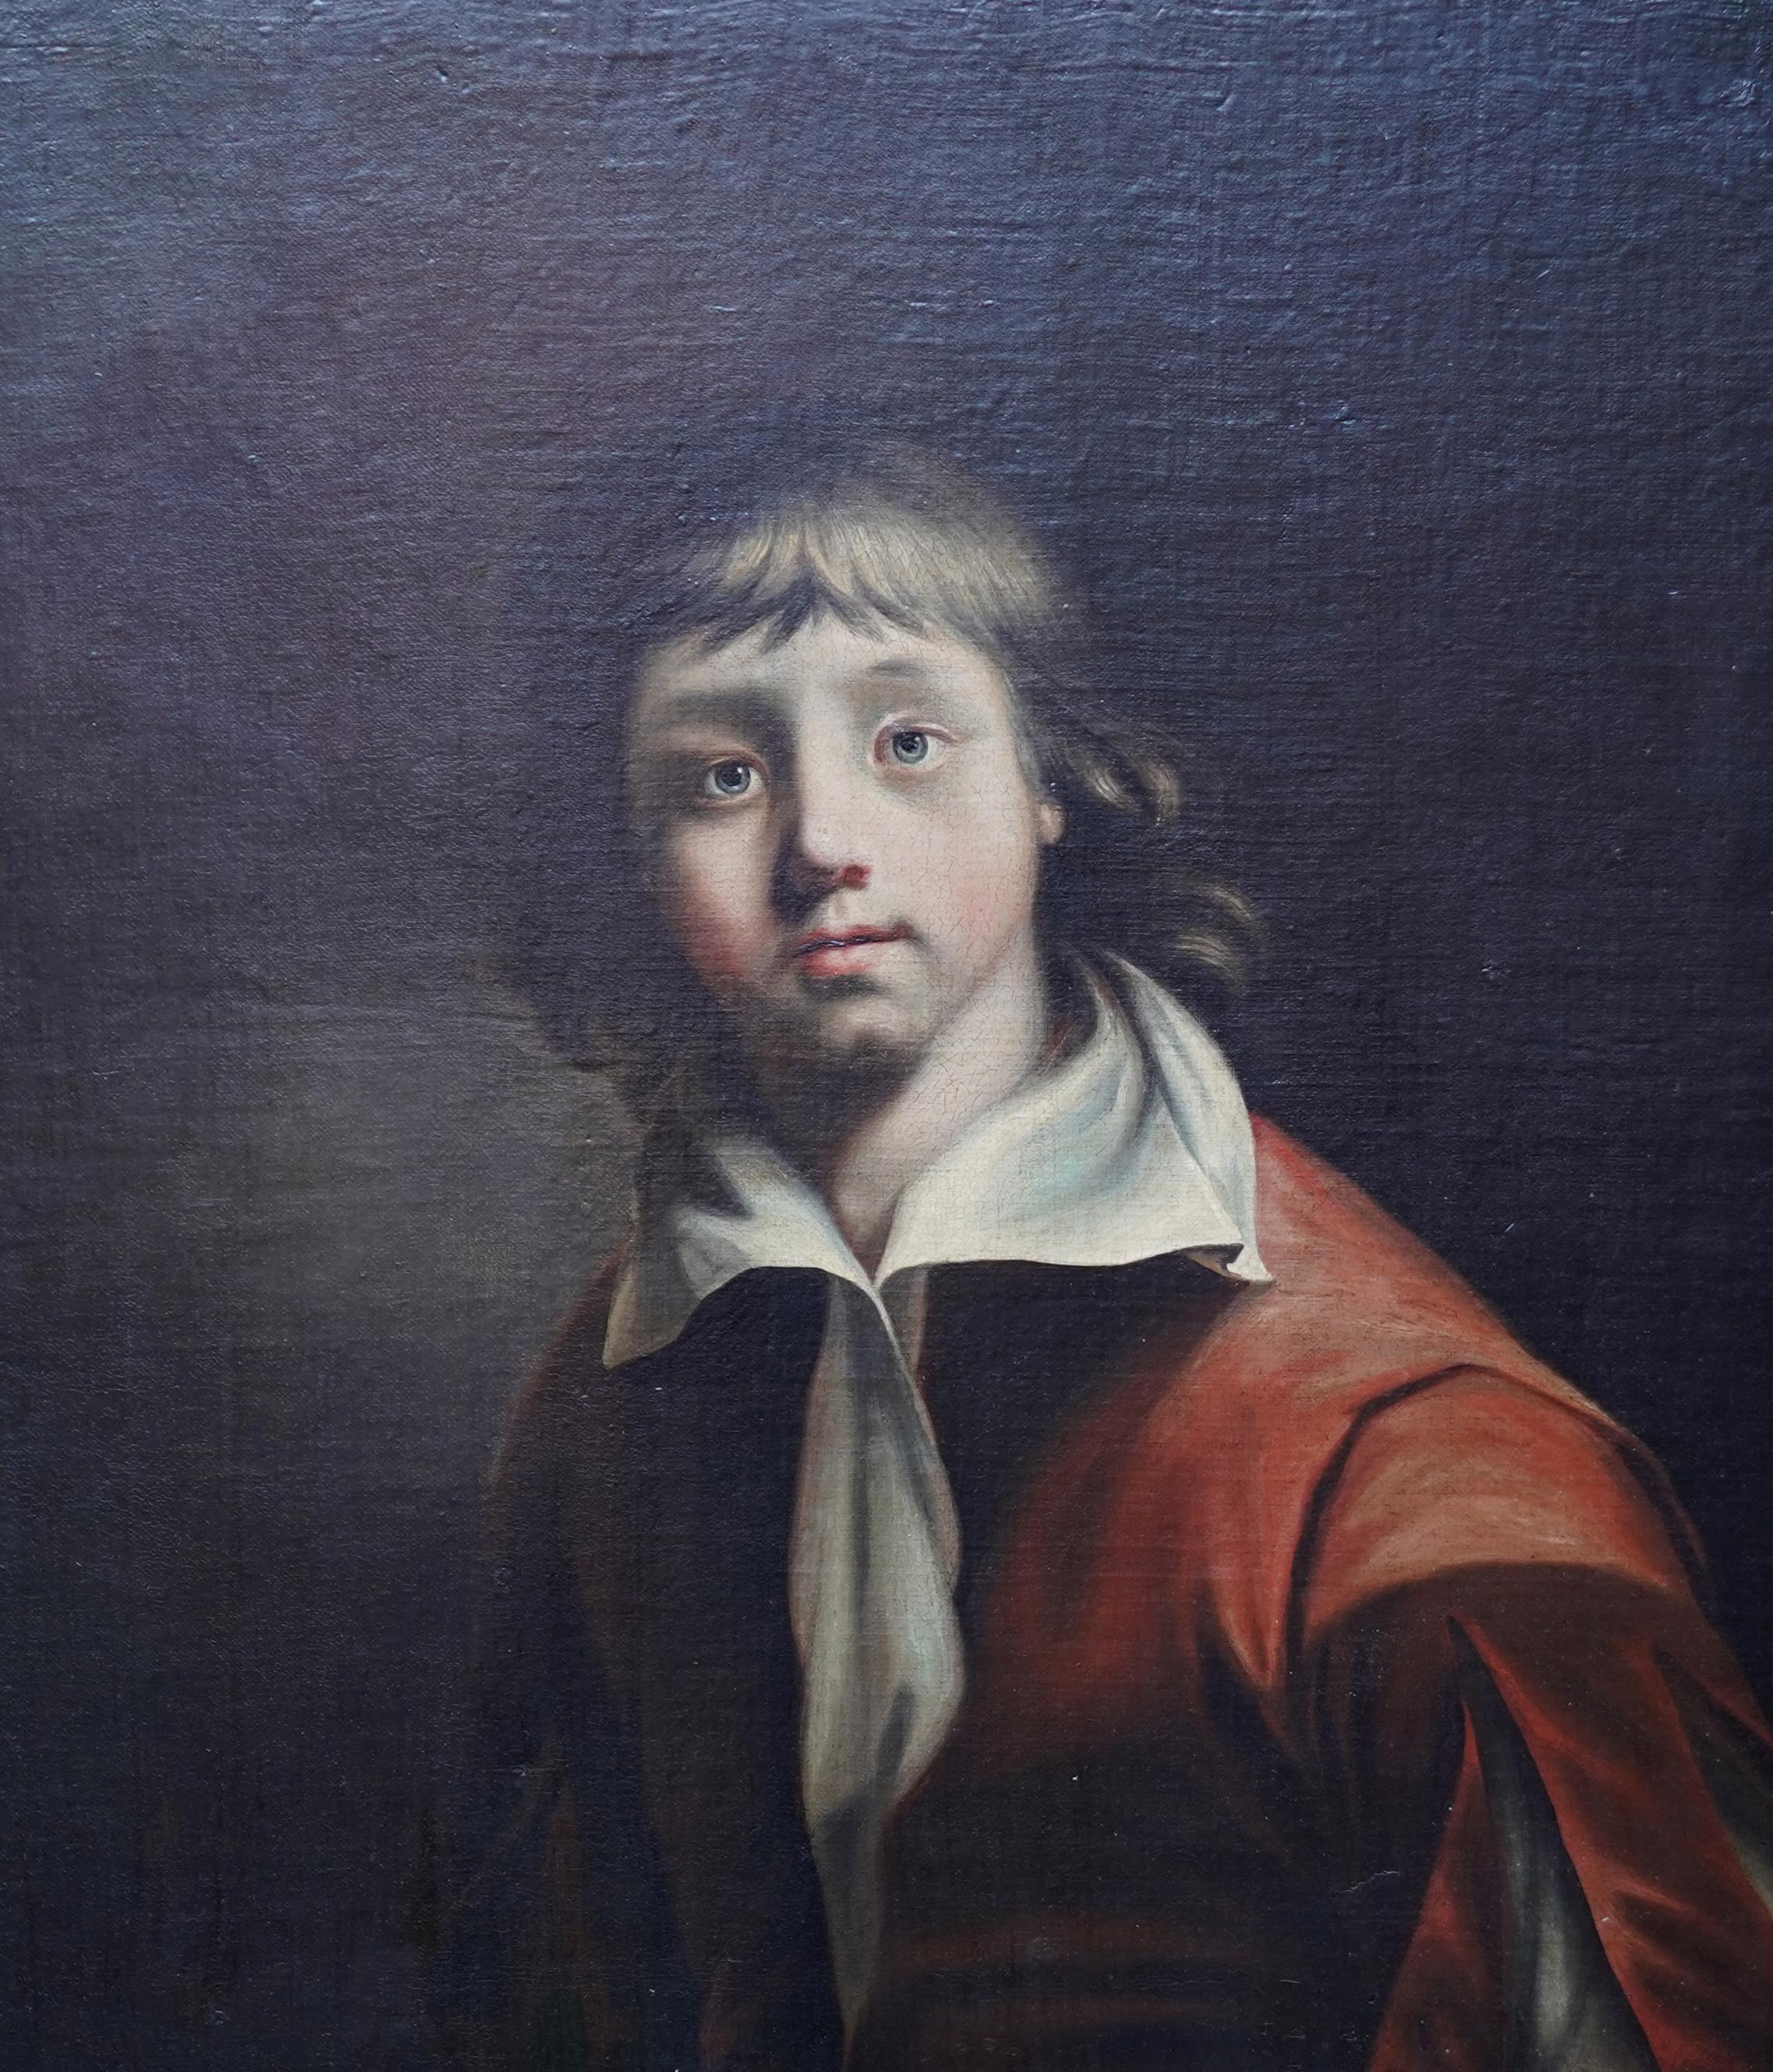 Retrato de un joven - Arte británico 1780 Viejo maestro retrato masculino pintura al óleo - Painting de Joseph Wright of Derby